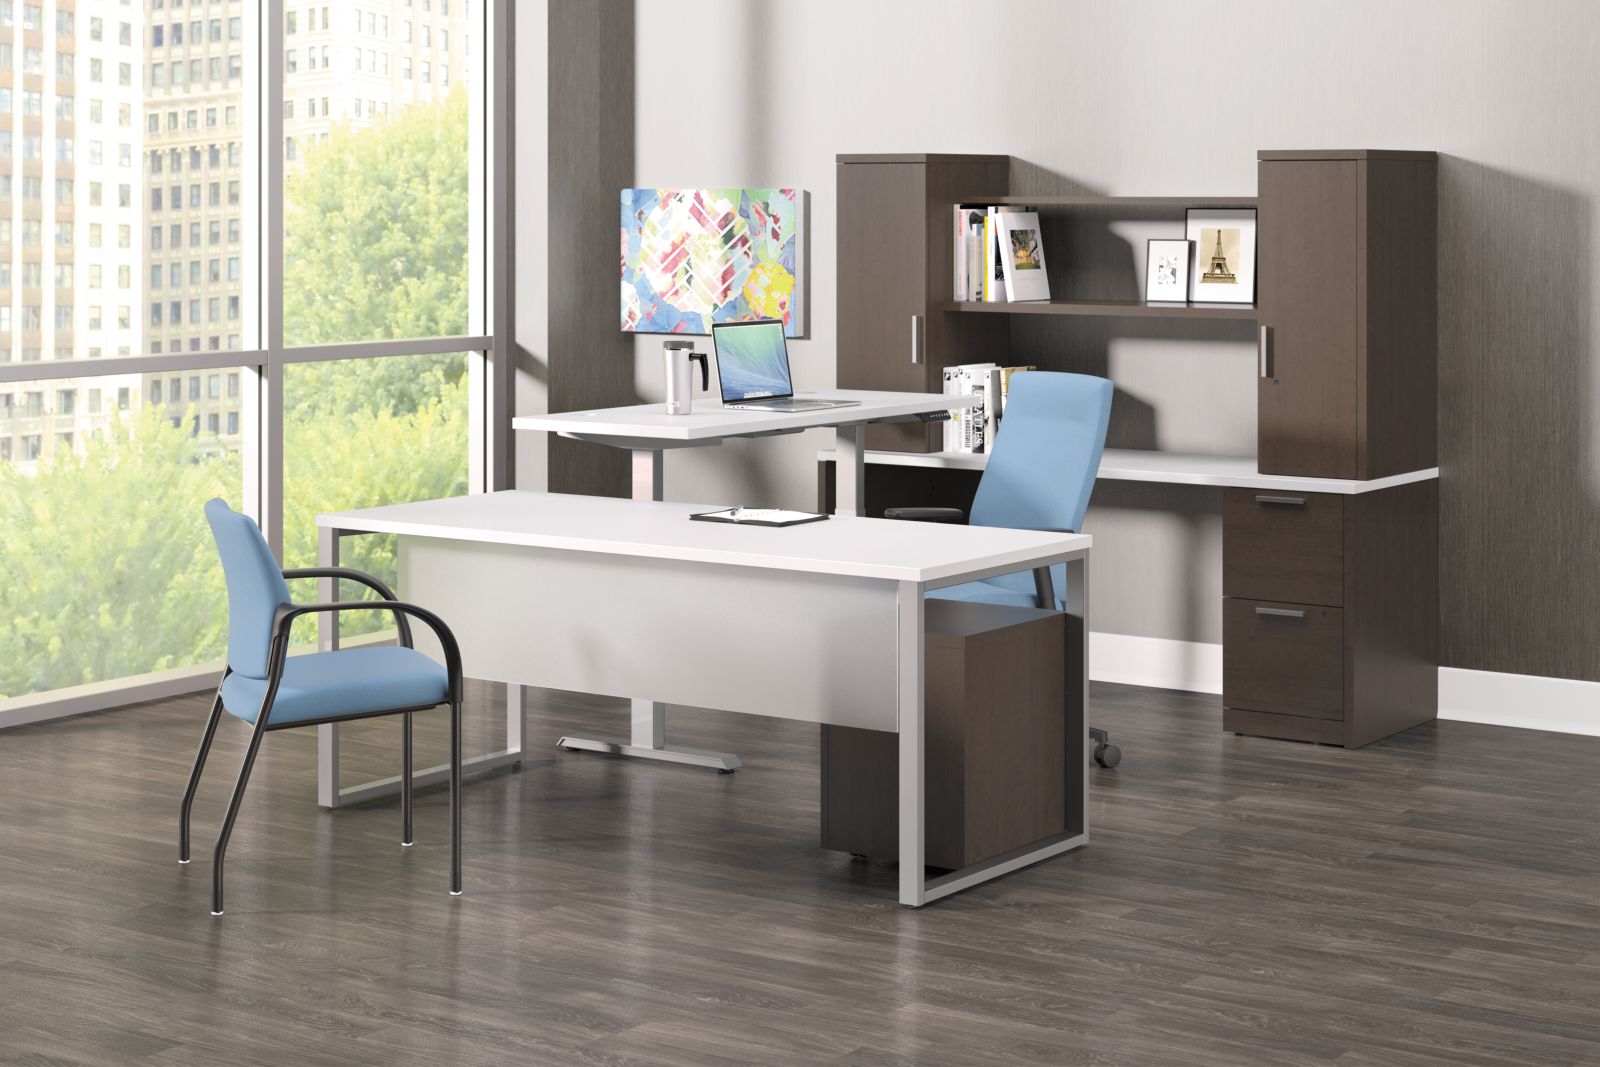 Coordinate Height Adjustable Base Hon Office Furniture